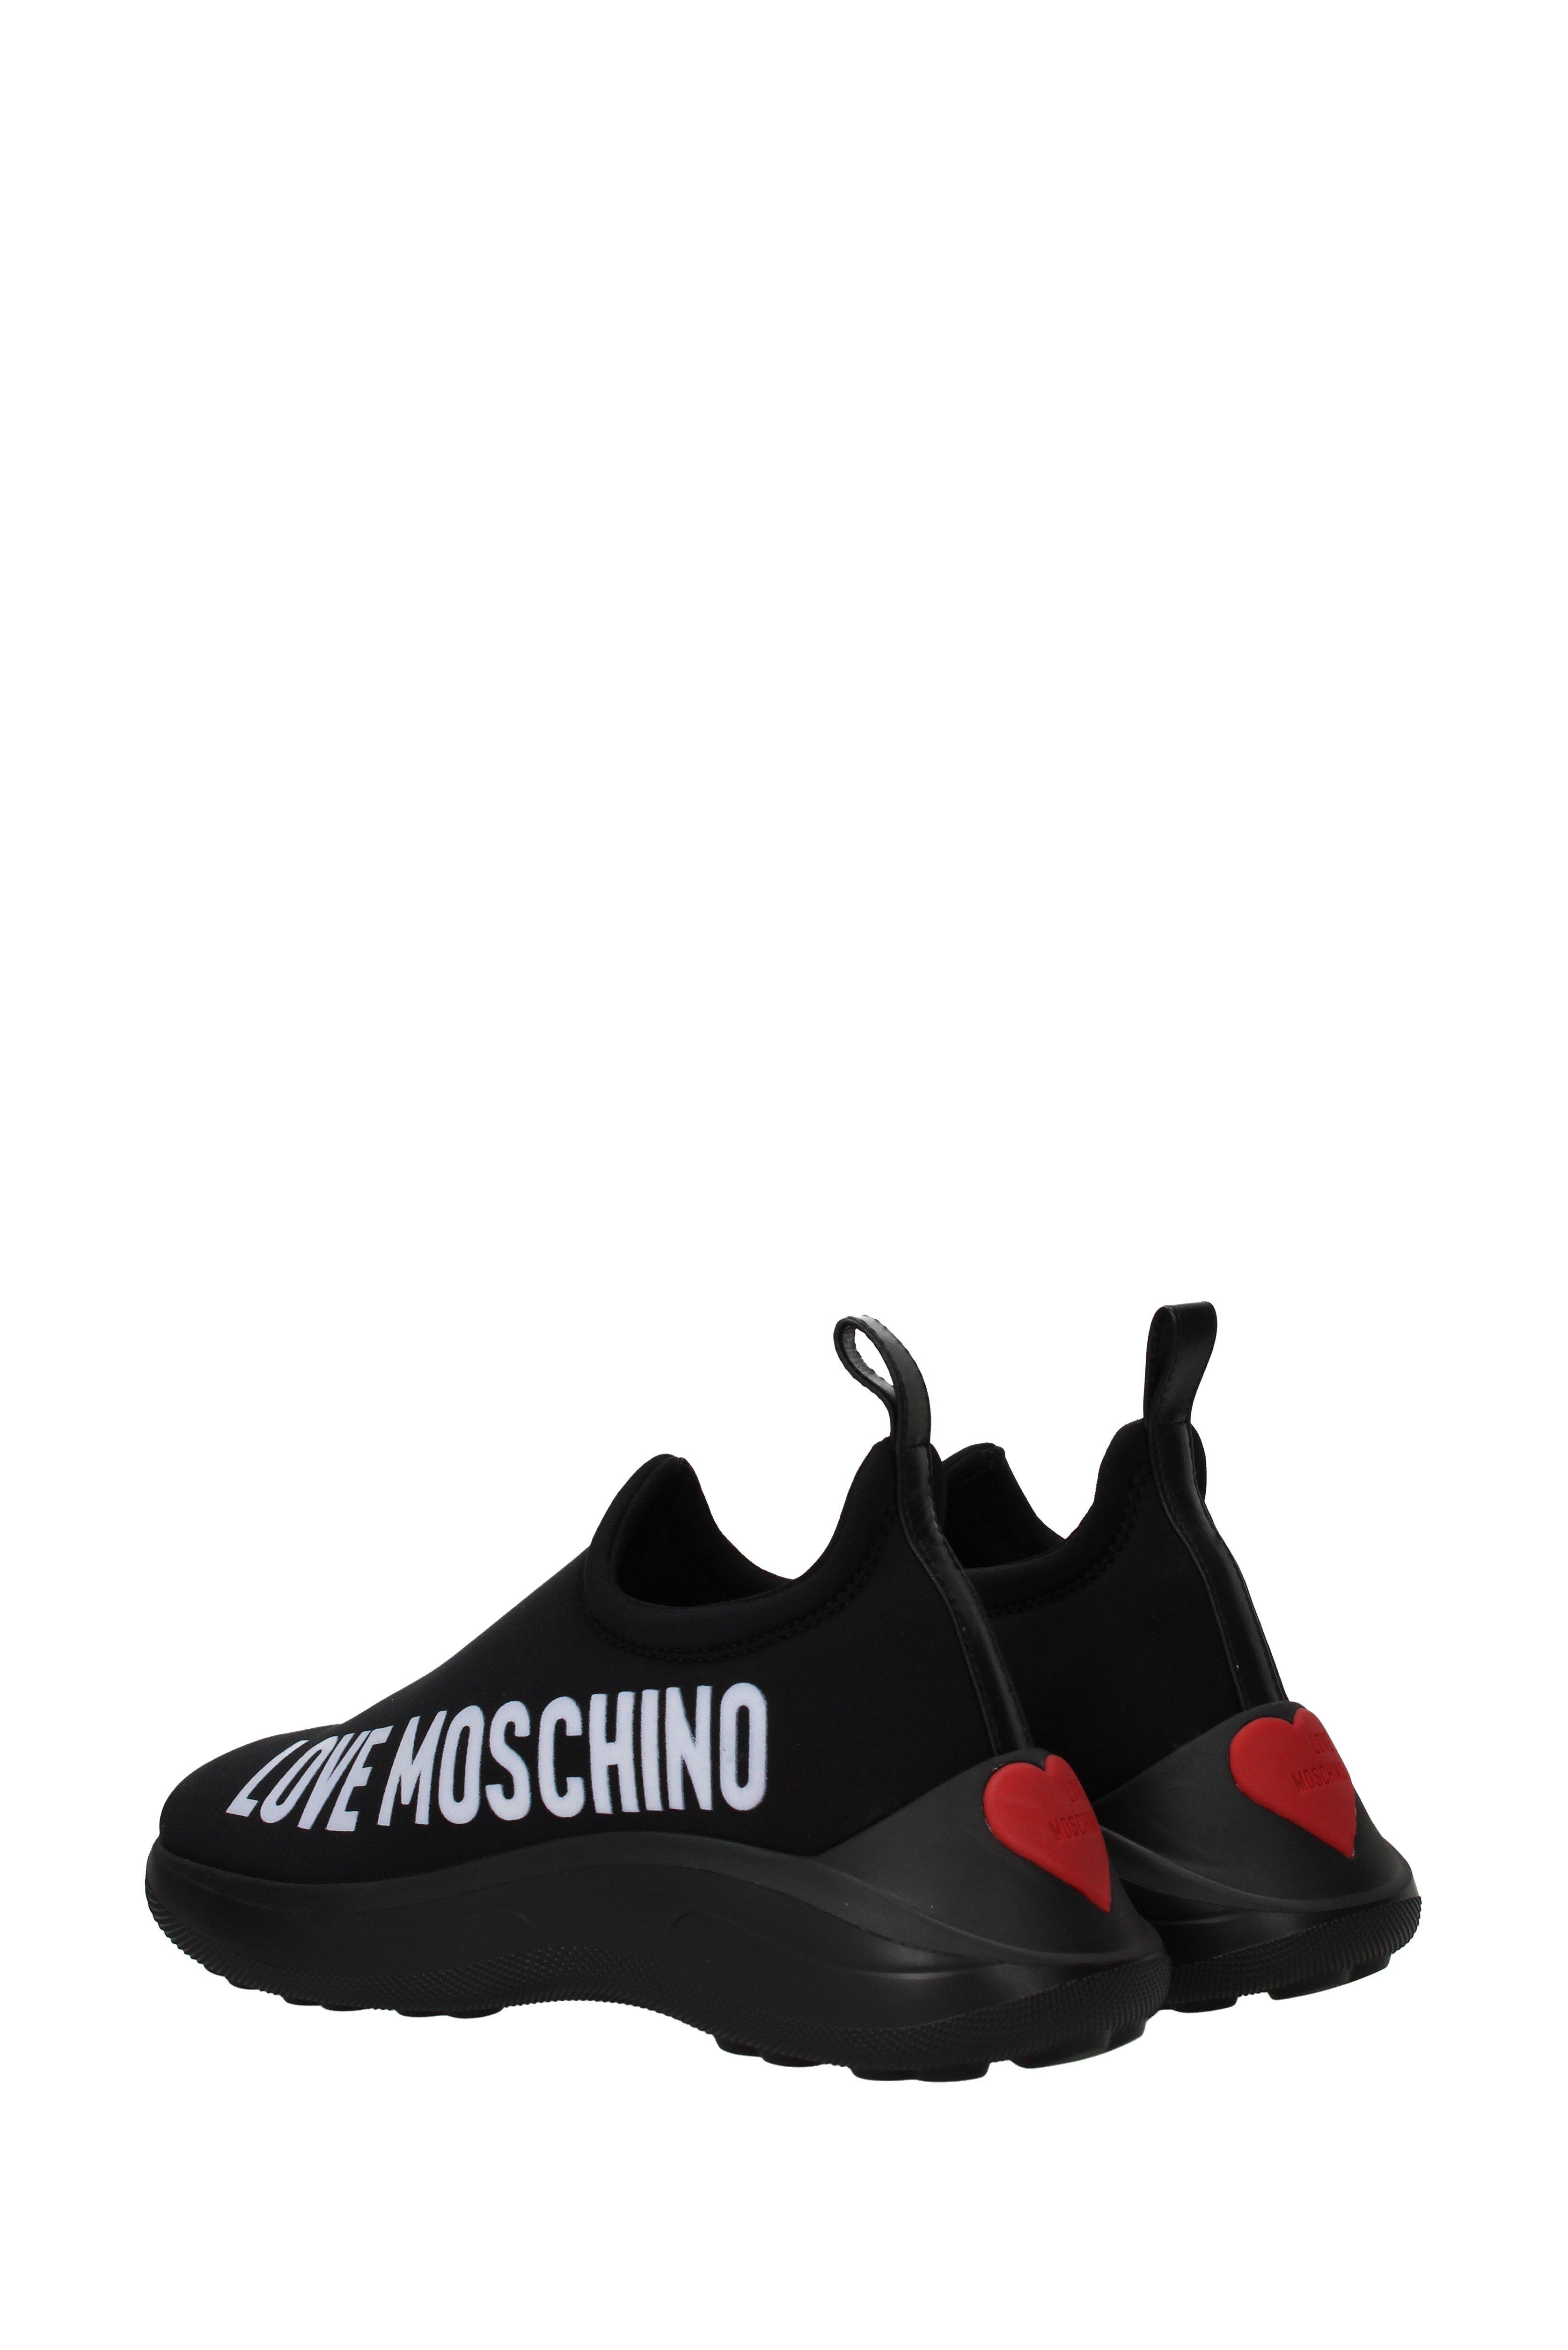 love moschino sneakers womens